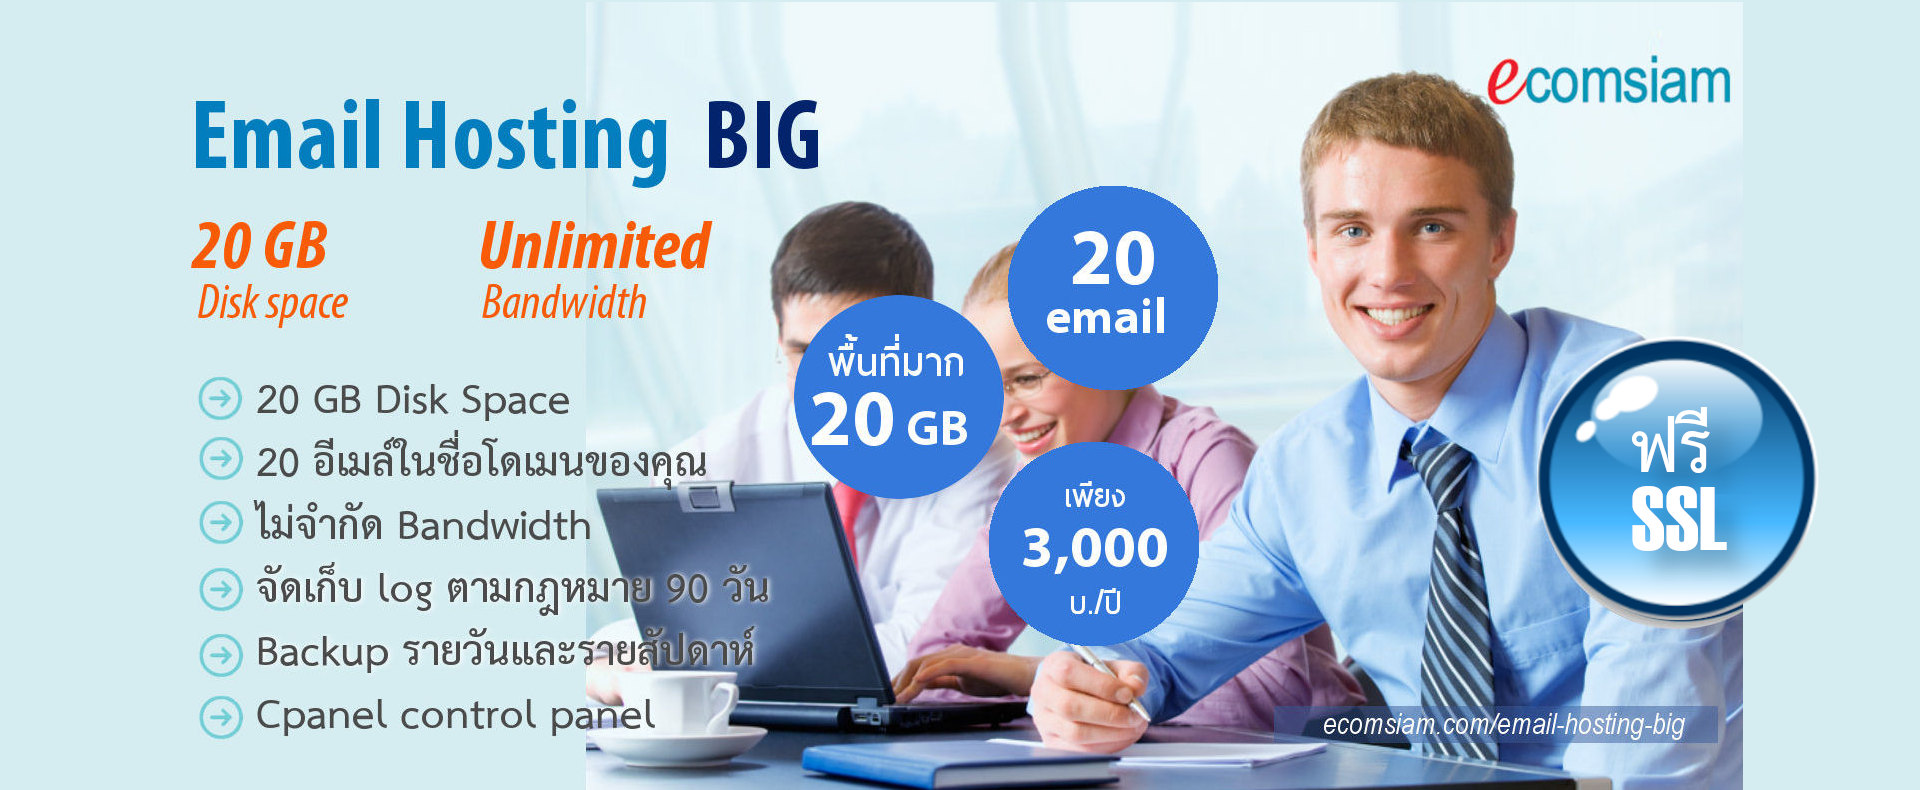 Email hosting thailand ไทย - big data พื้นที่มากถึง 20 GB/20 email เพียง 3000 บาทต่อปี พร้อมใบรับรอง SSL